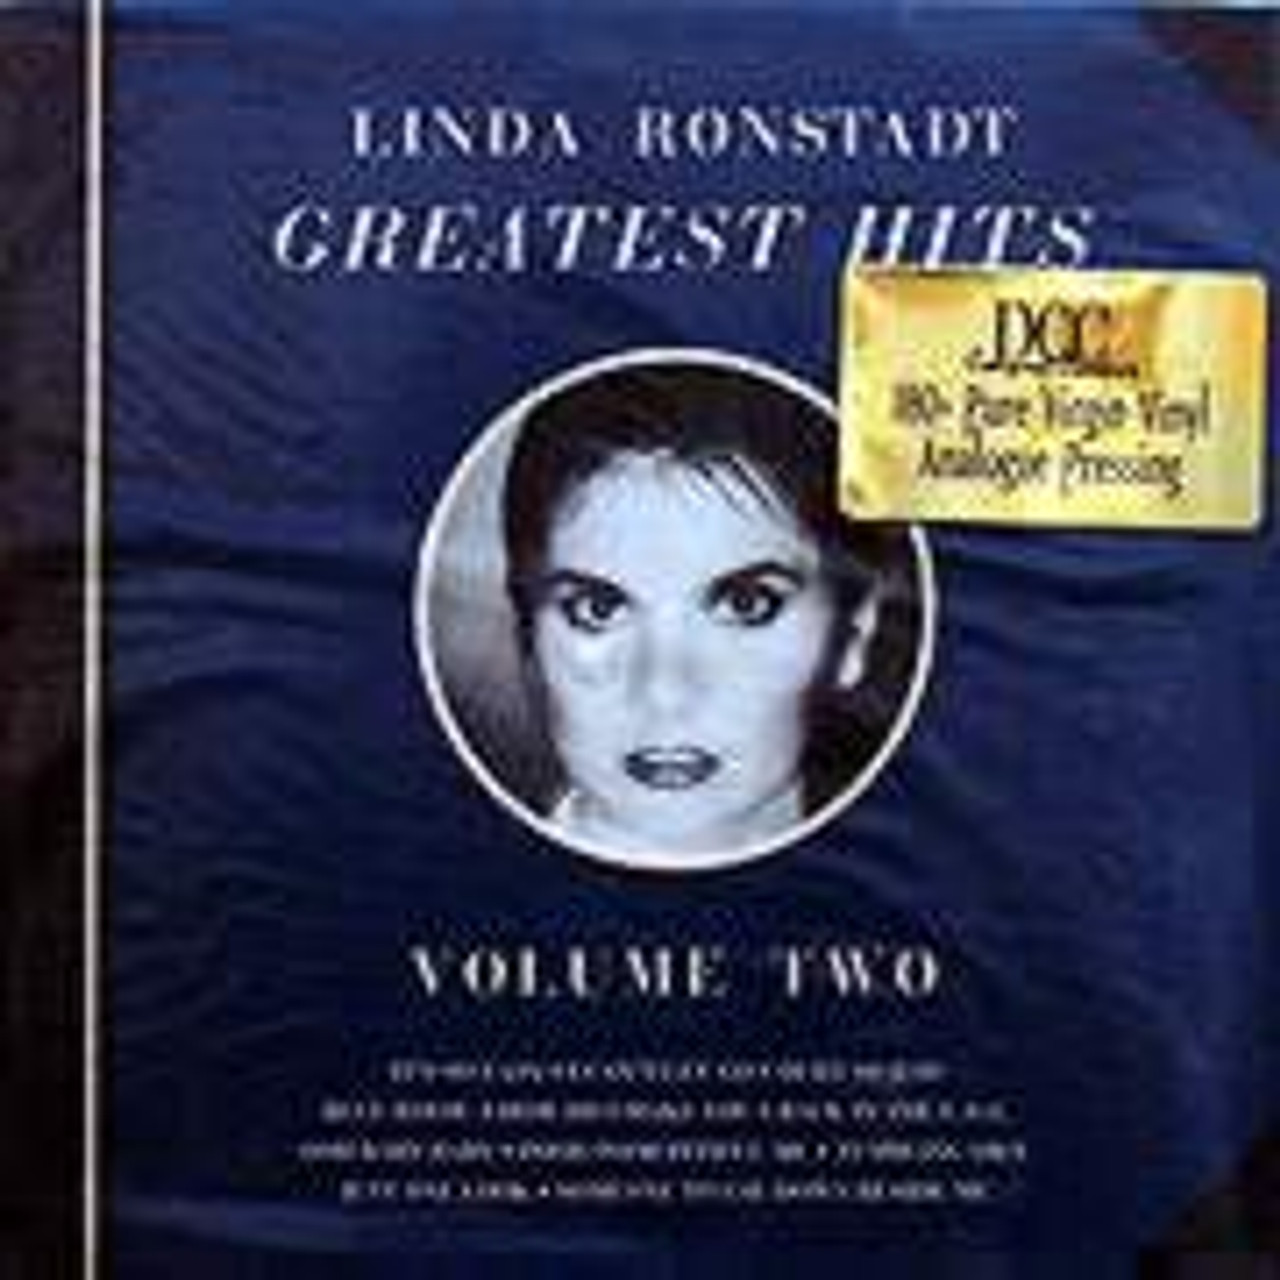 Linda Ronstadt Greatest Hits Volume 2 DCC 180g LP